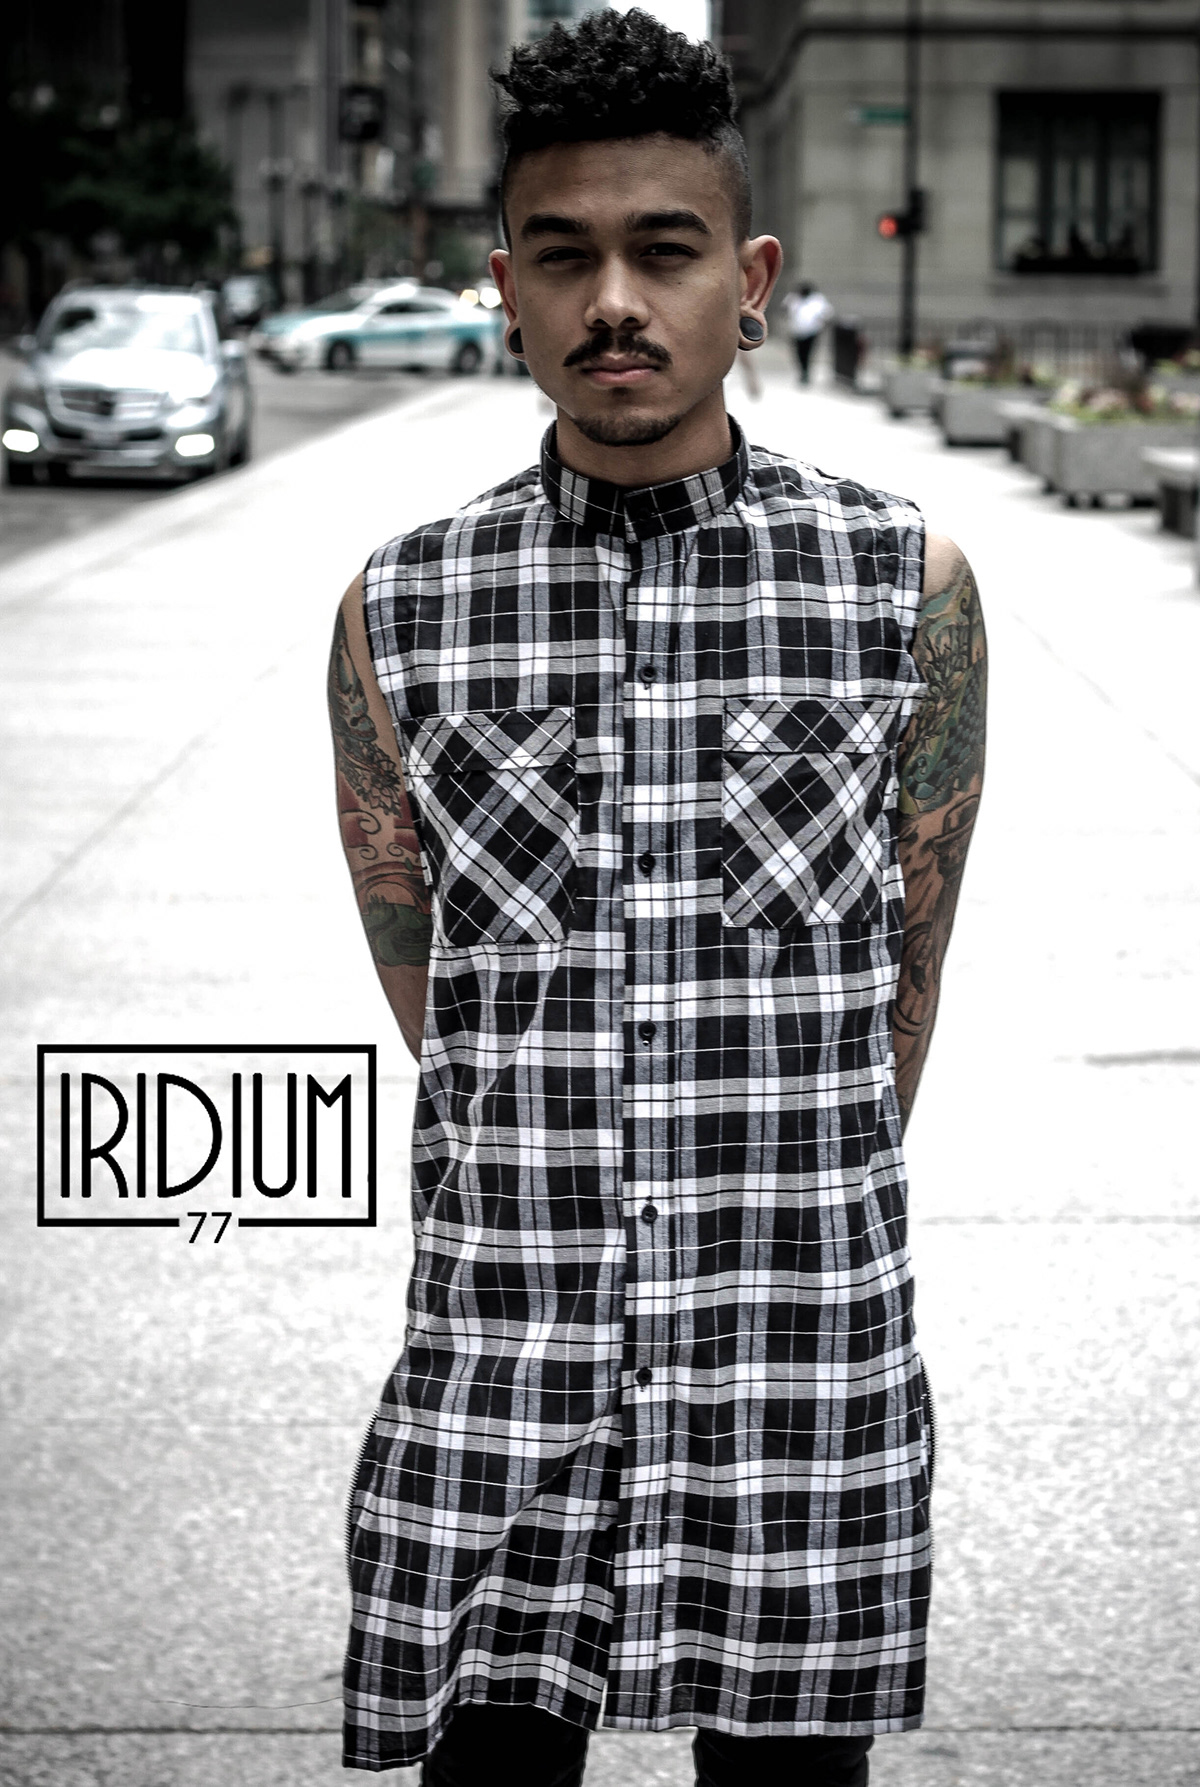 Clothing brand Iridium Style